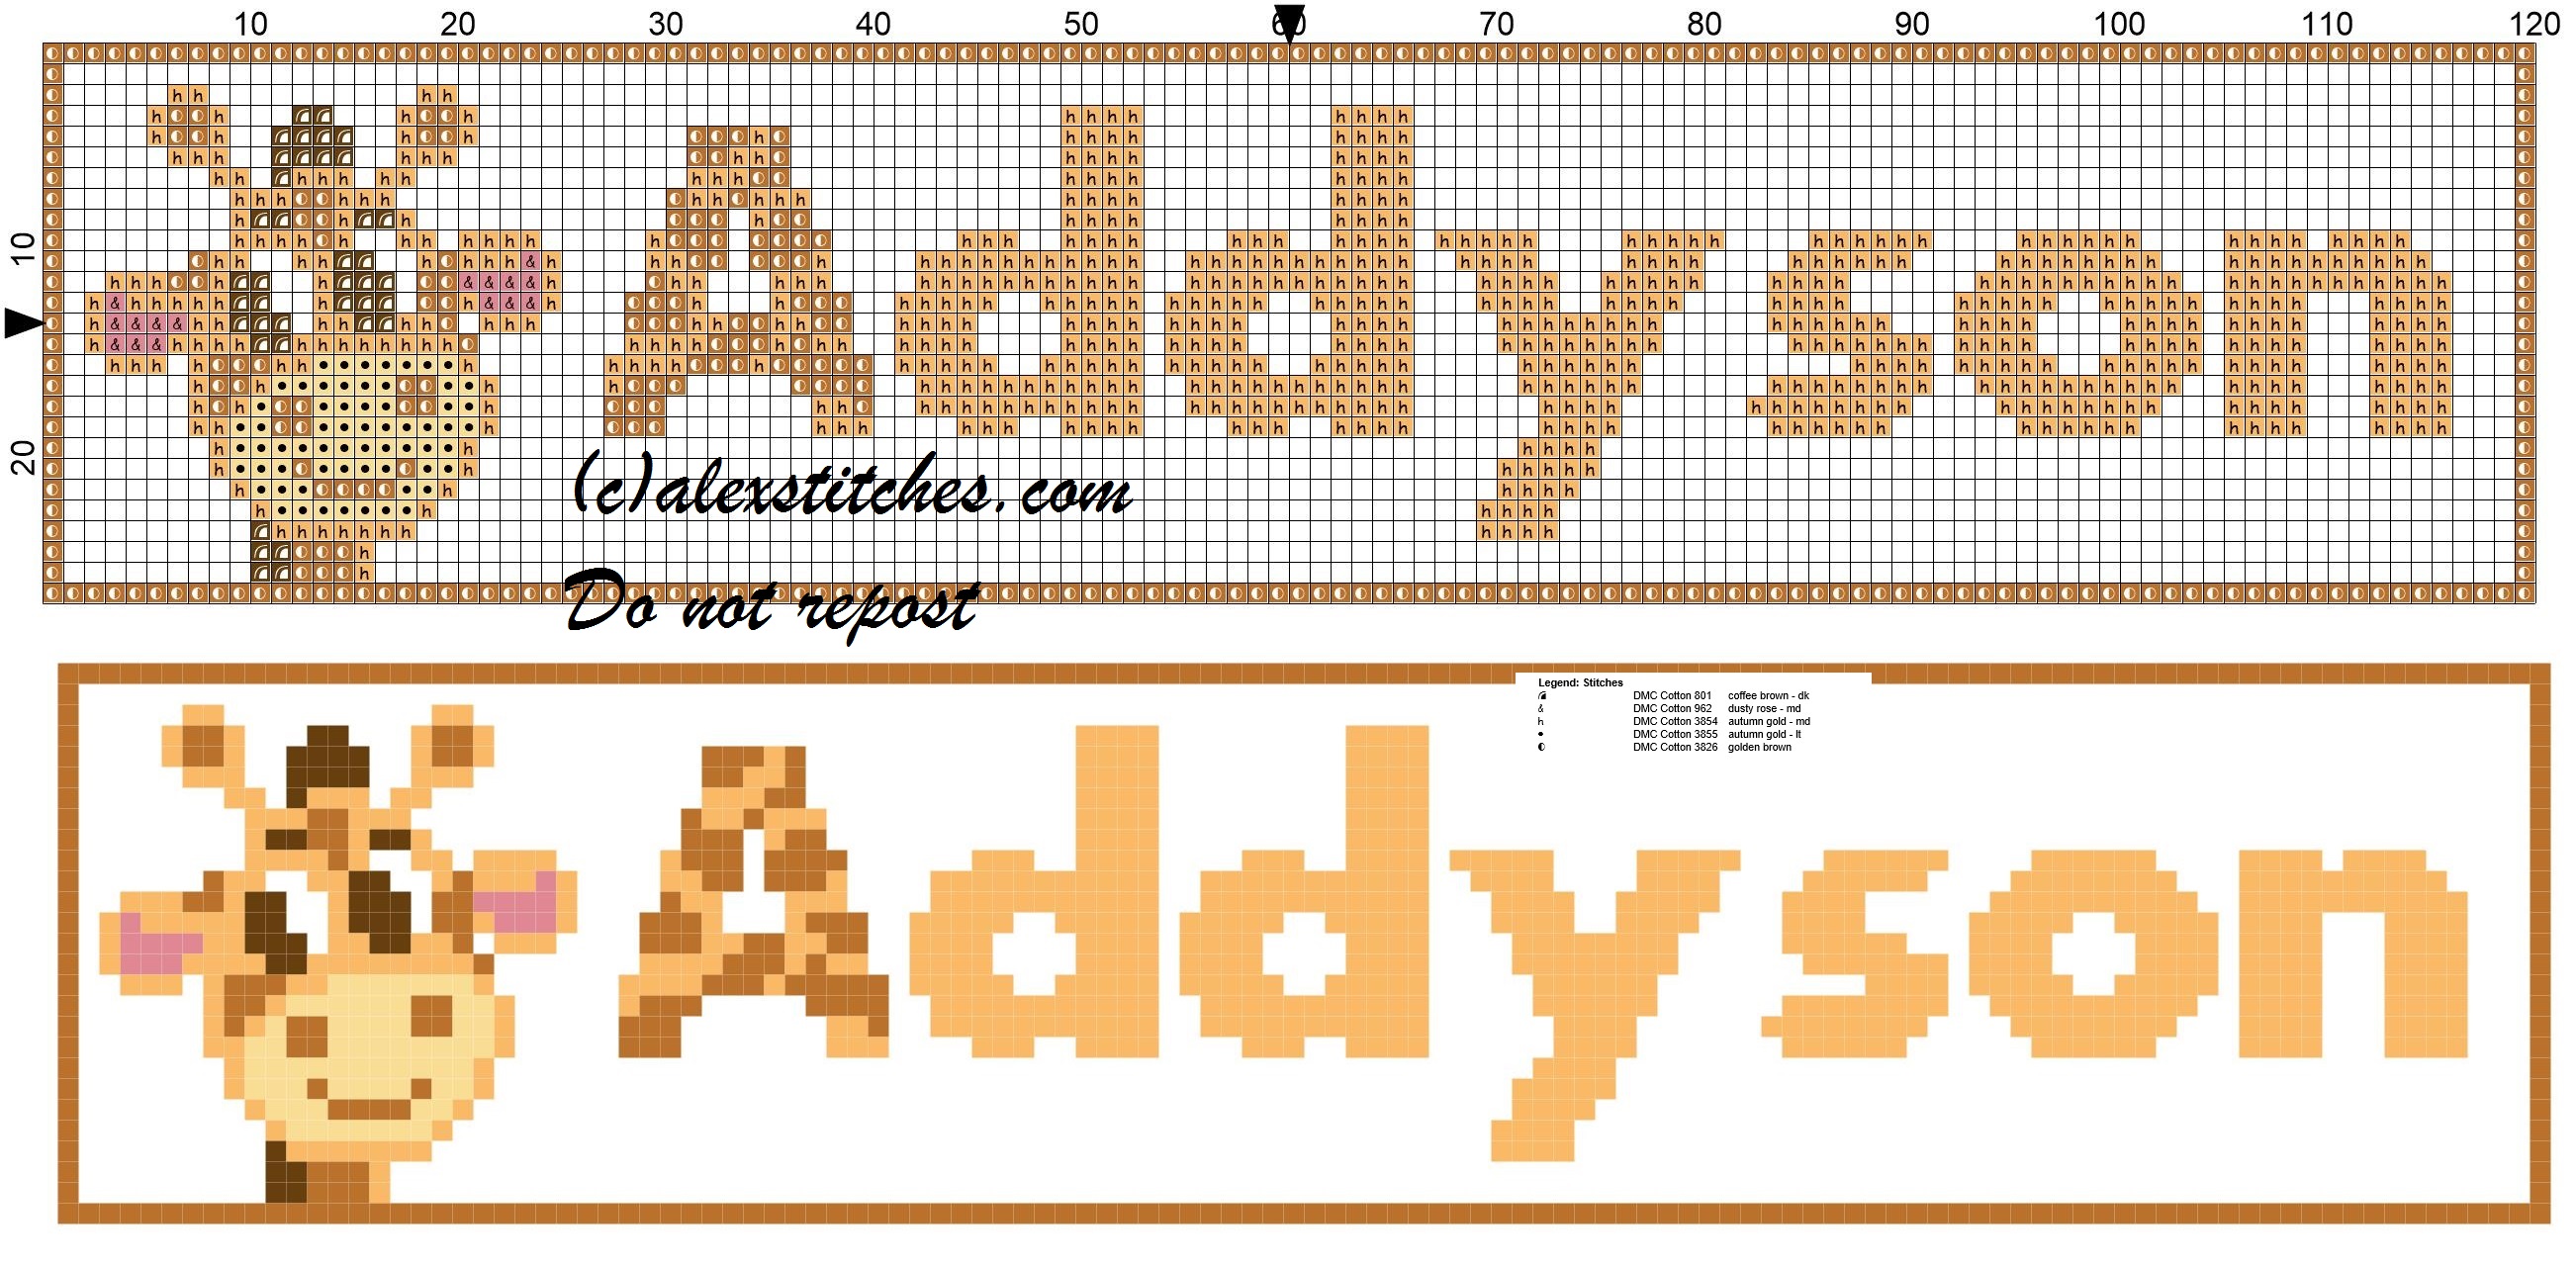 Addyson name with giraffe cross stitch pattern